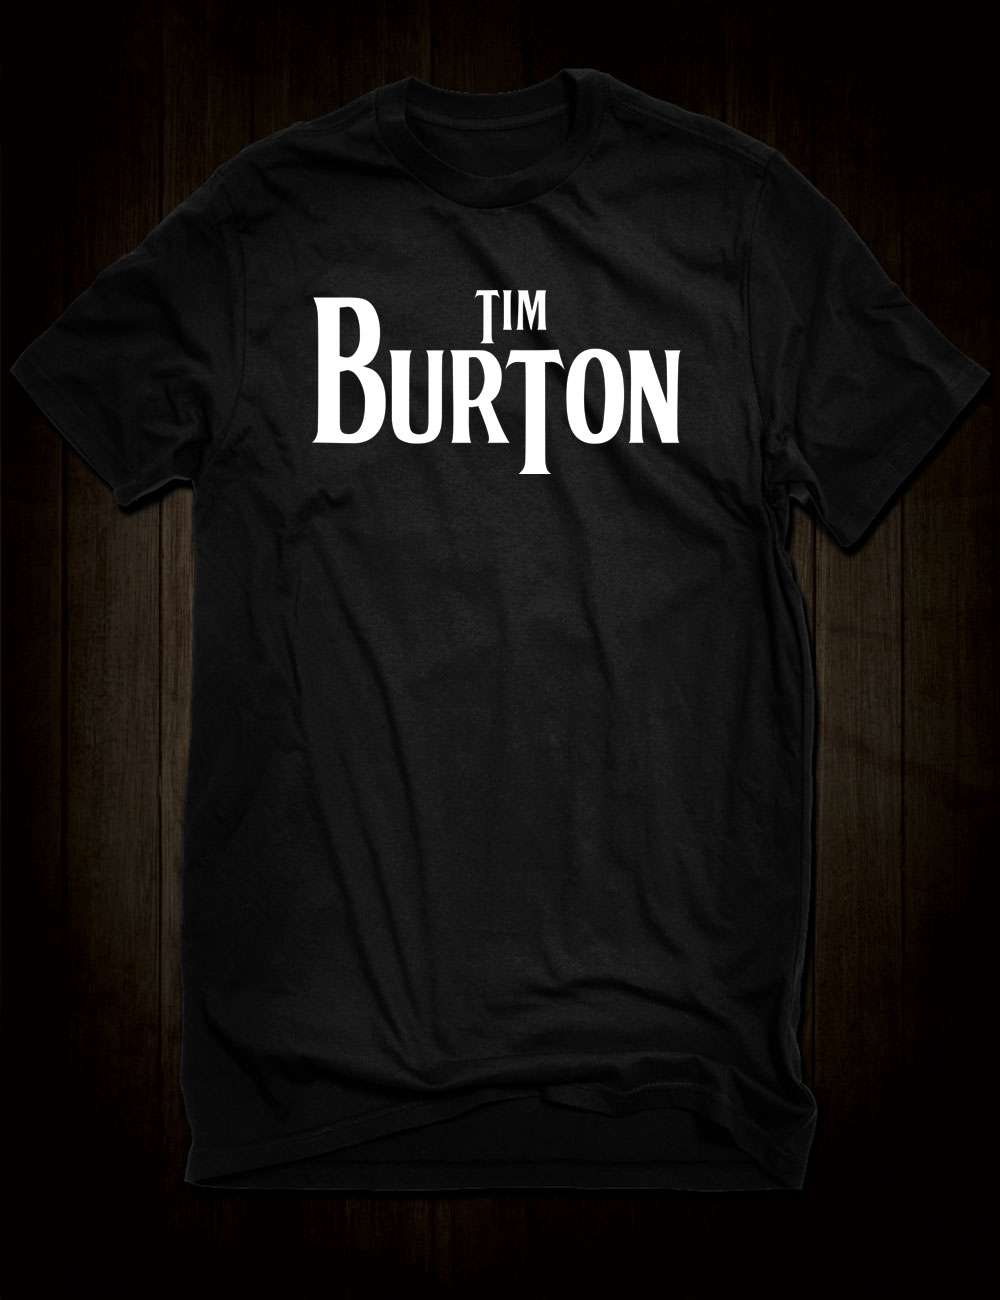 Tim Burton - The Beatles T-Shirt